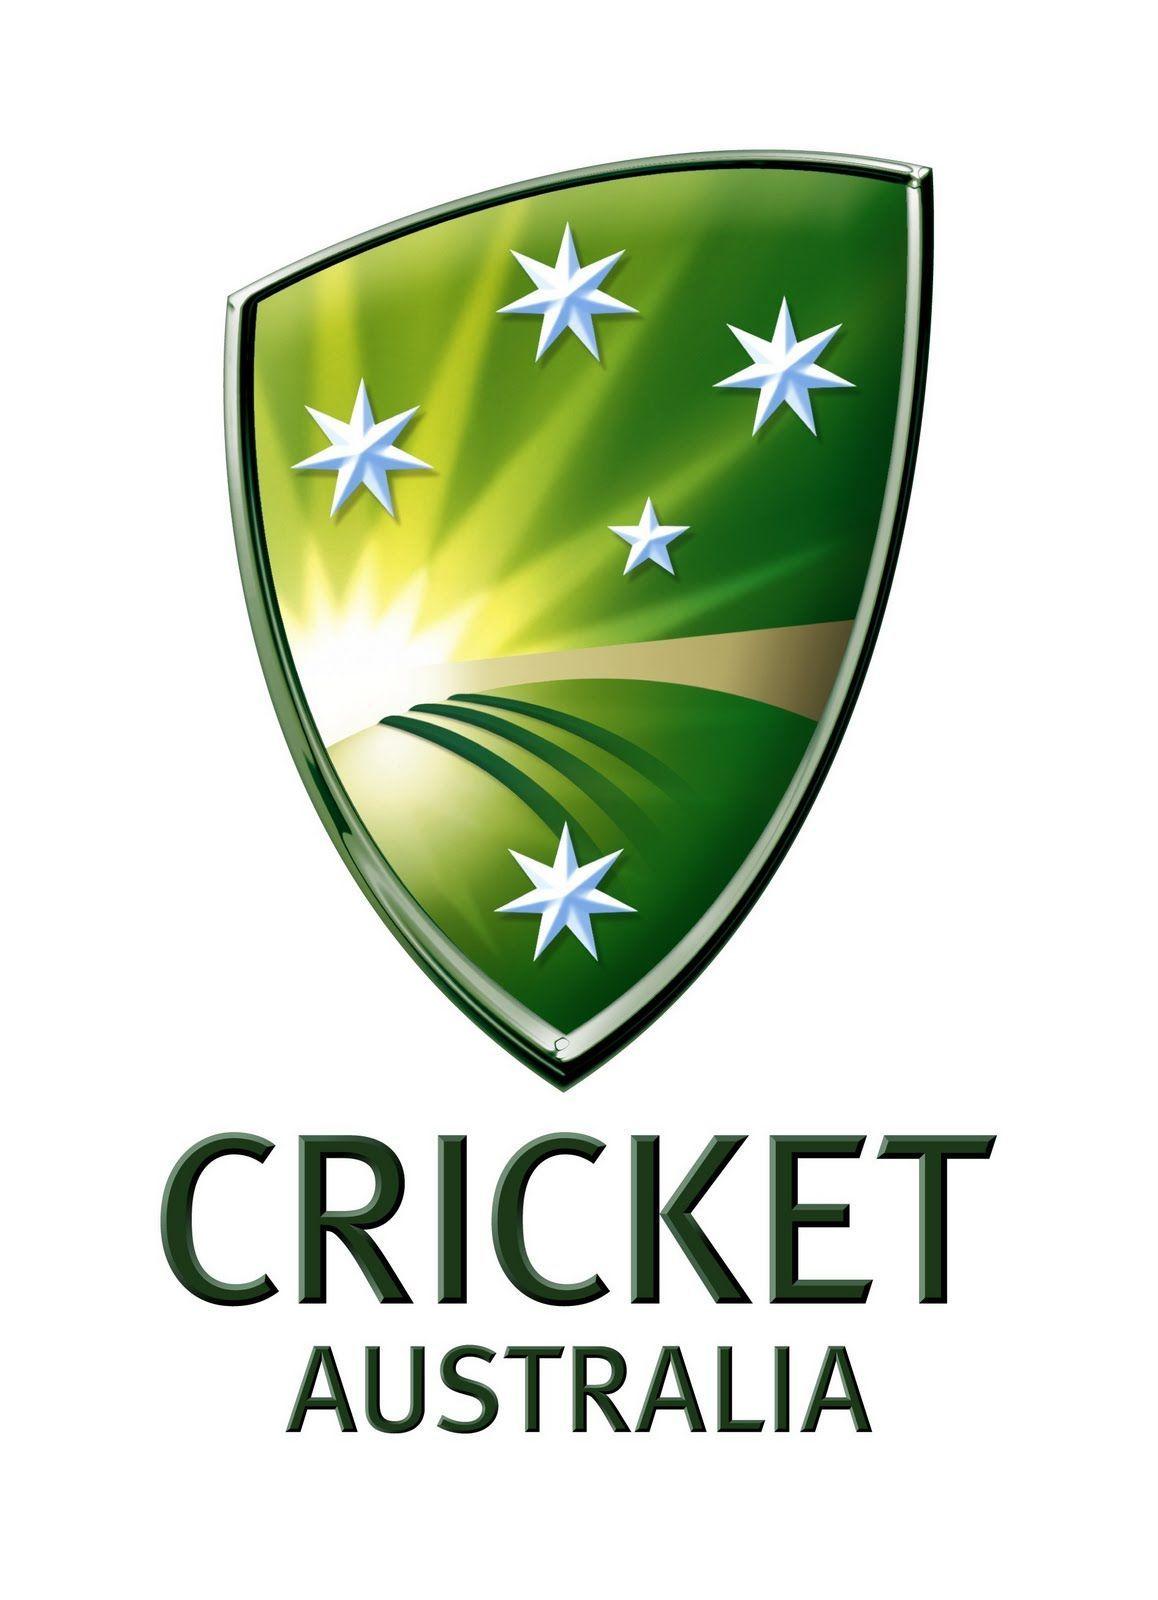 Australia Logo - Australia cricket bord logo picture, Australia cricket logo